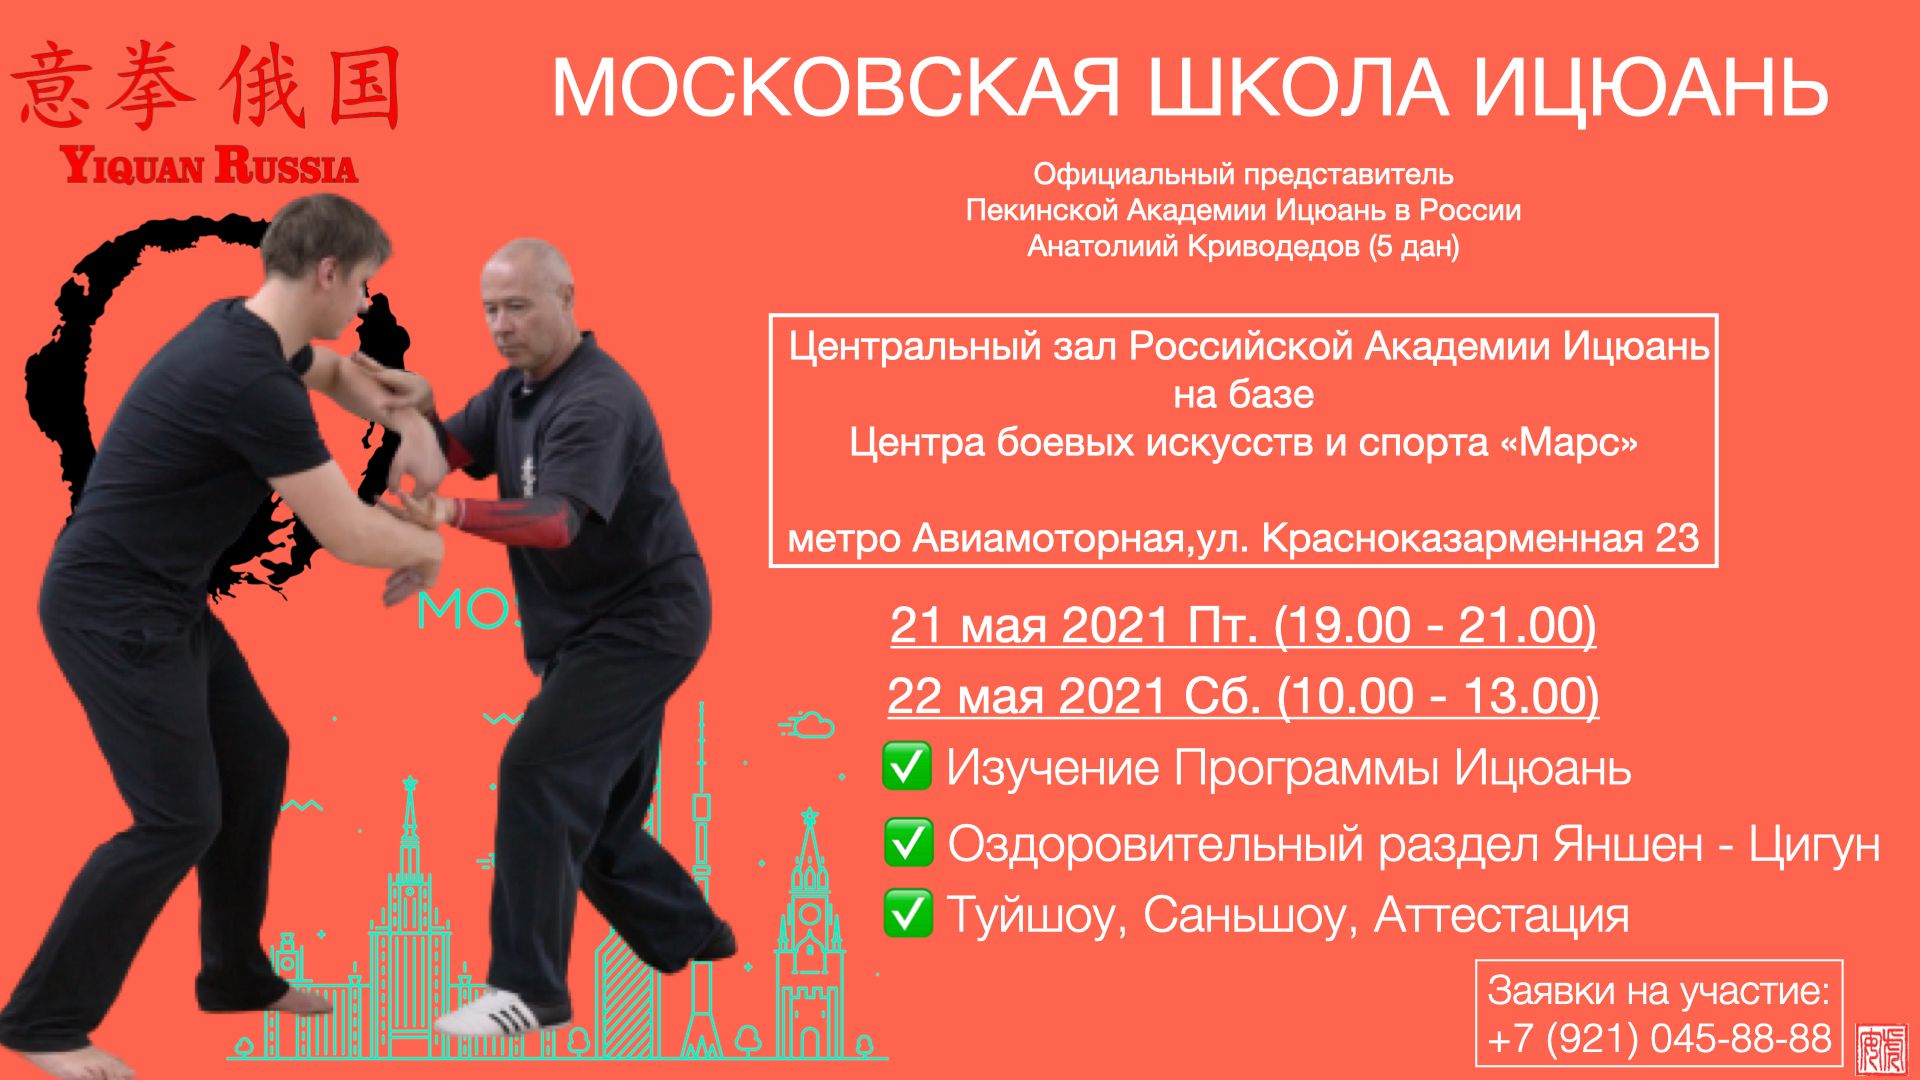 Московская Школа Ицюань, 21-22 мая 2021